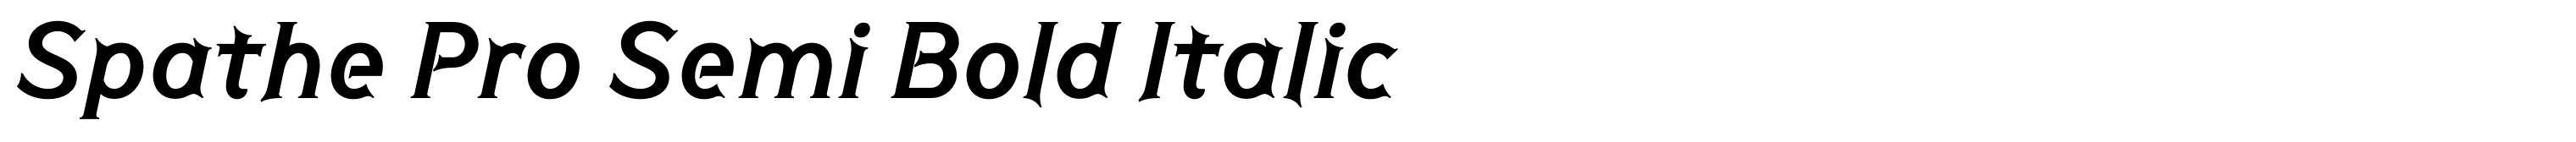 Spathe Pro Semi Bold Italic